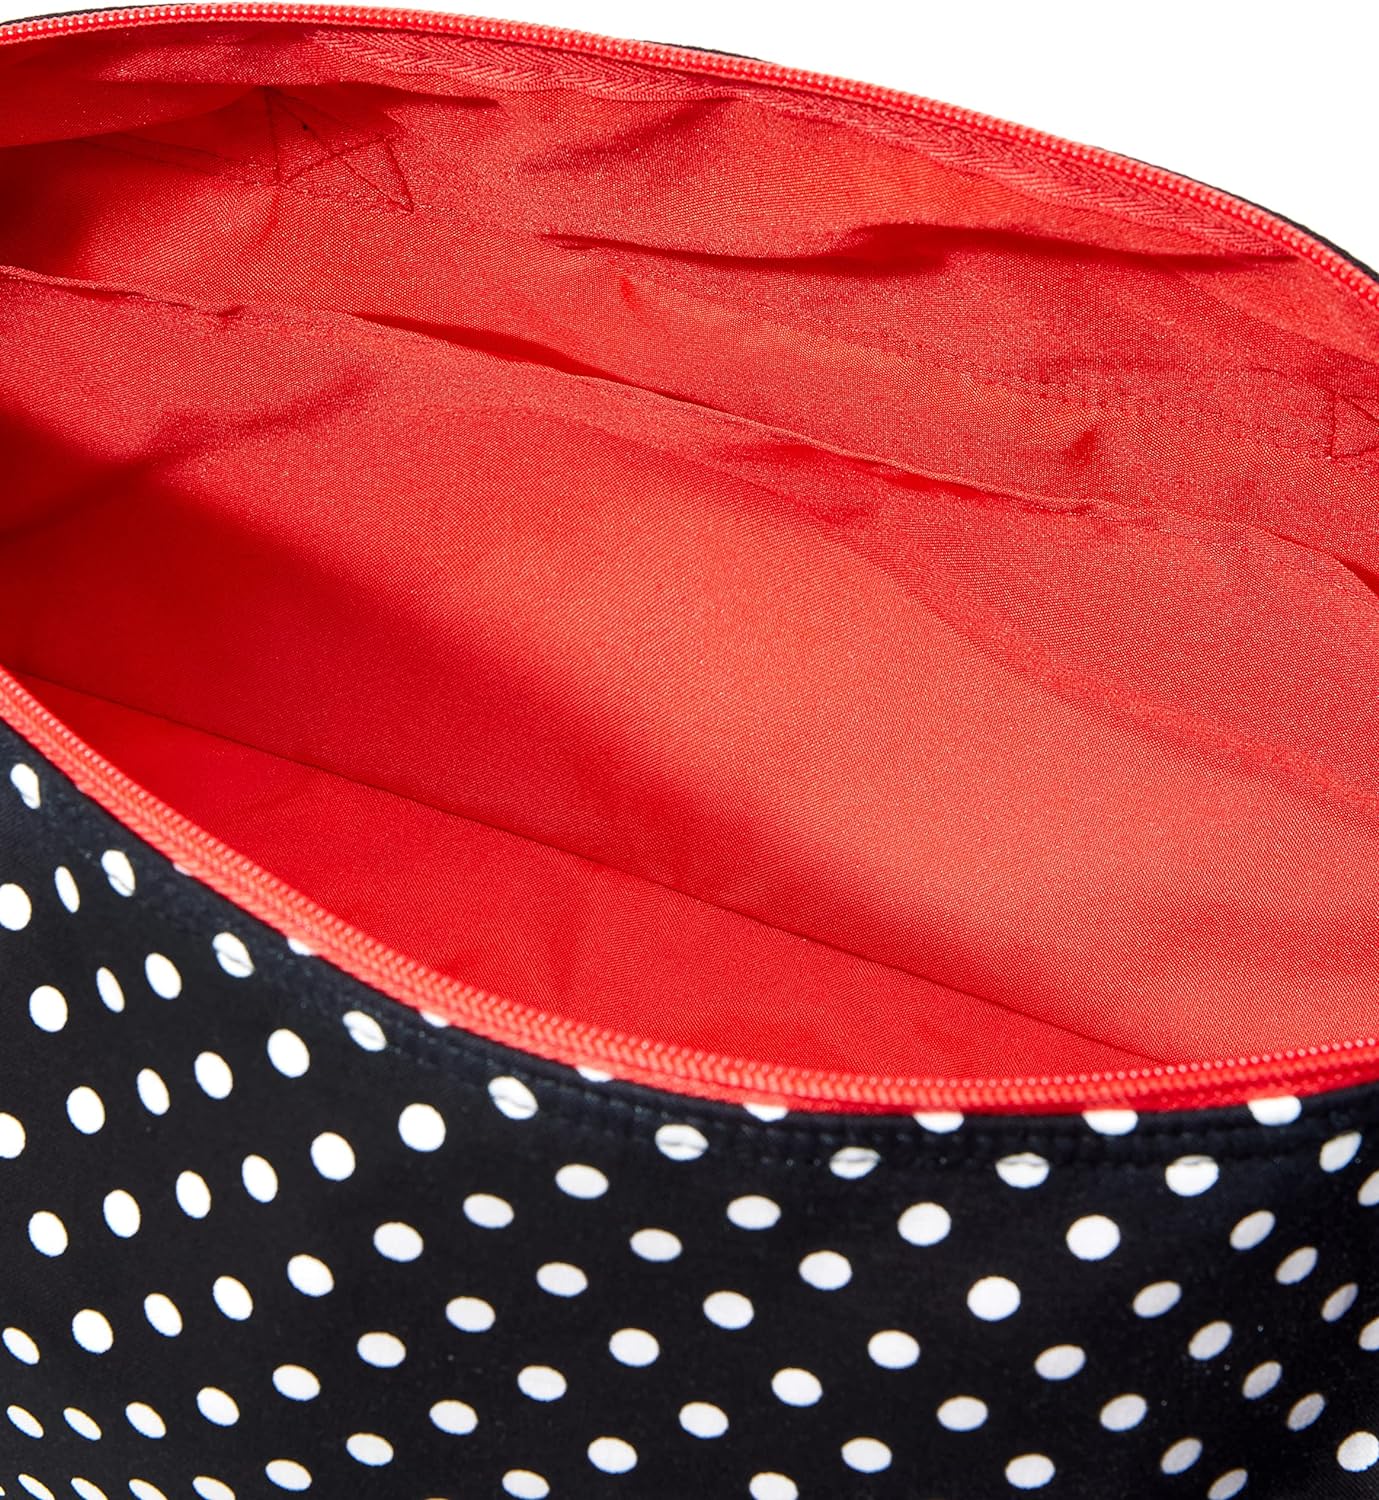 Prym - Polka Dots Fabric Knitting and Needlework Bag